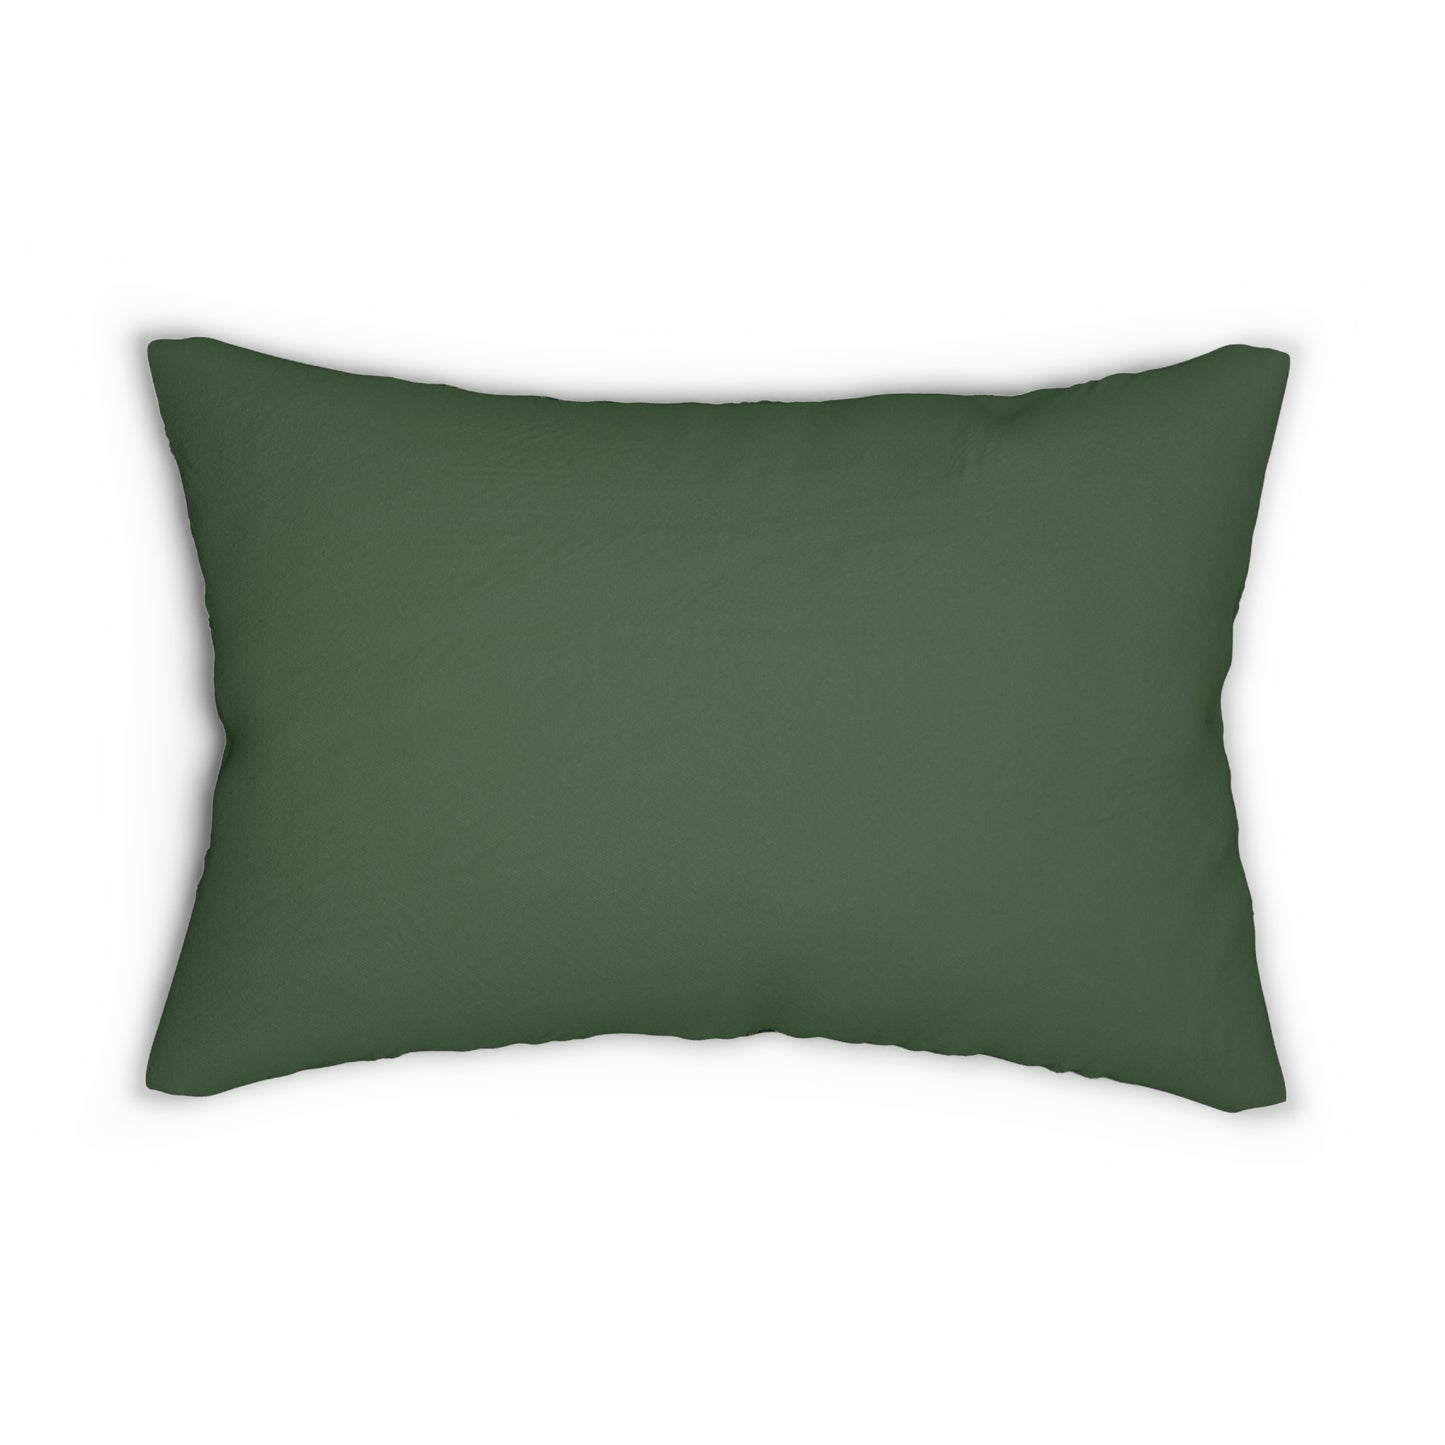 William-Morris-&-Co-Spun-Poly-Lumbar-Cushion-and-Cushion-Cover-Flower-Garden-Collection-2